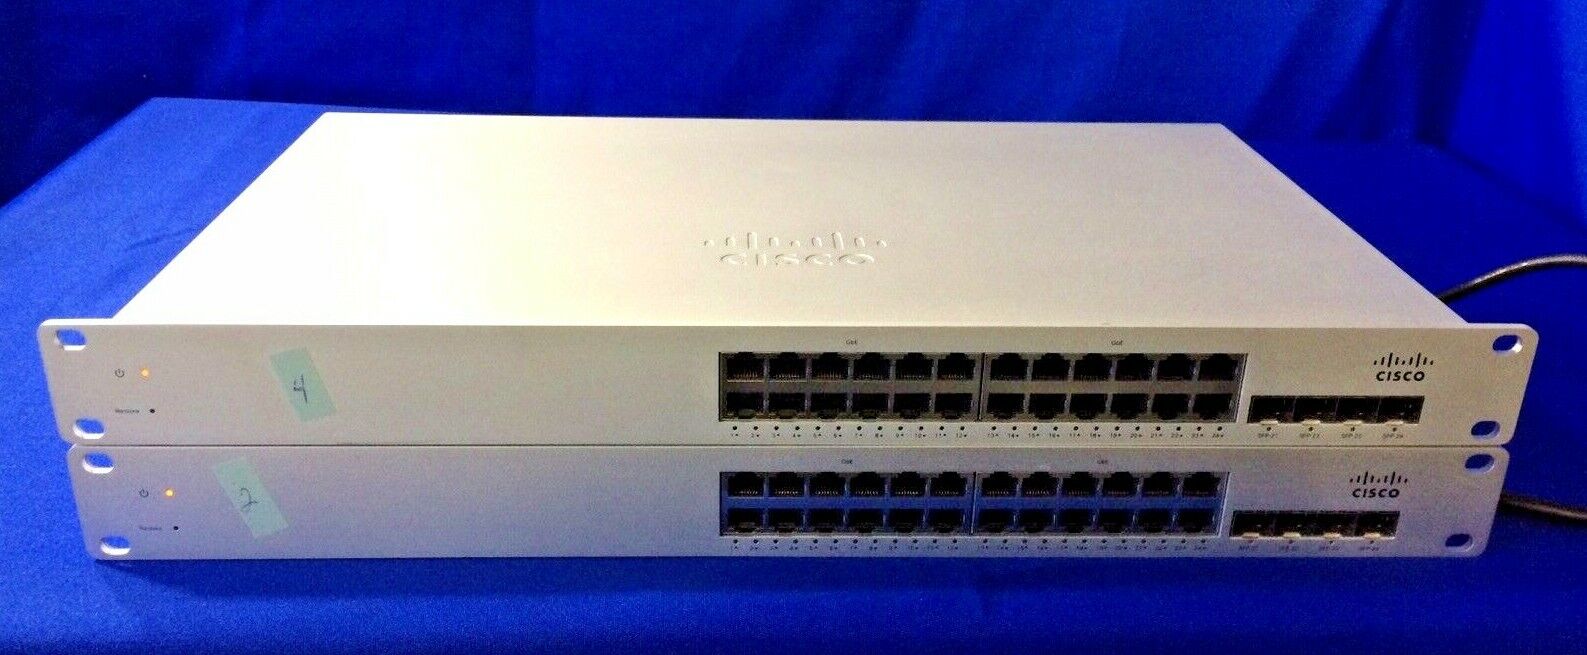 Lot of 2 Cisco Meraki MS220-24-HW 24-Port Gigabit Ethernet Switches - FOR PARTS